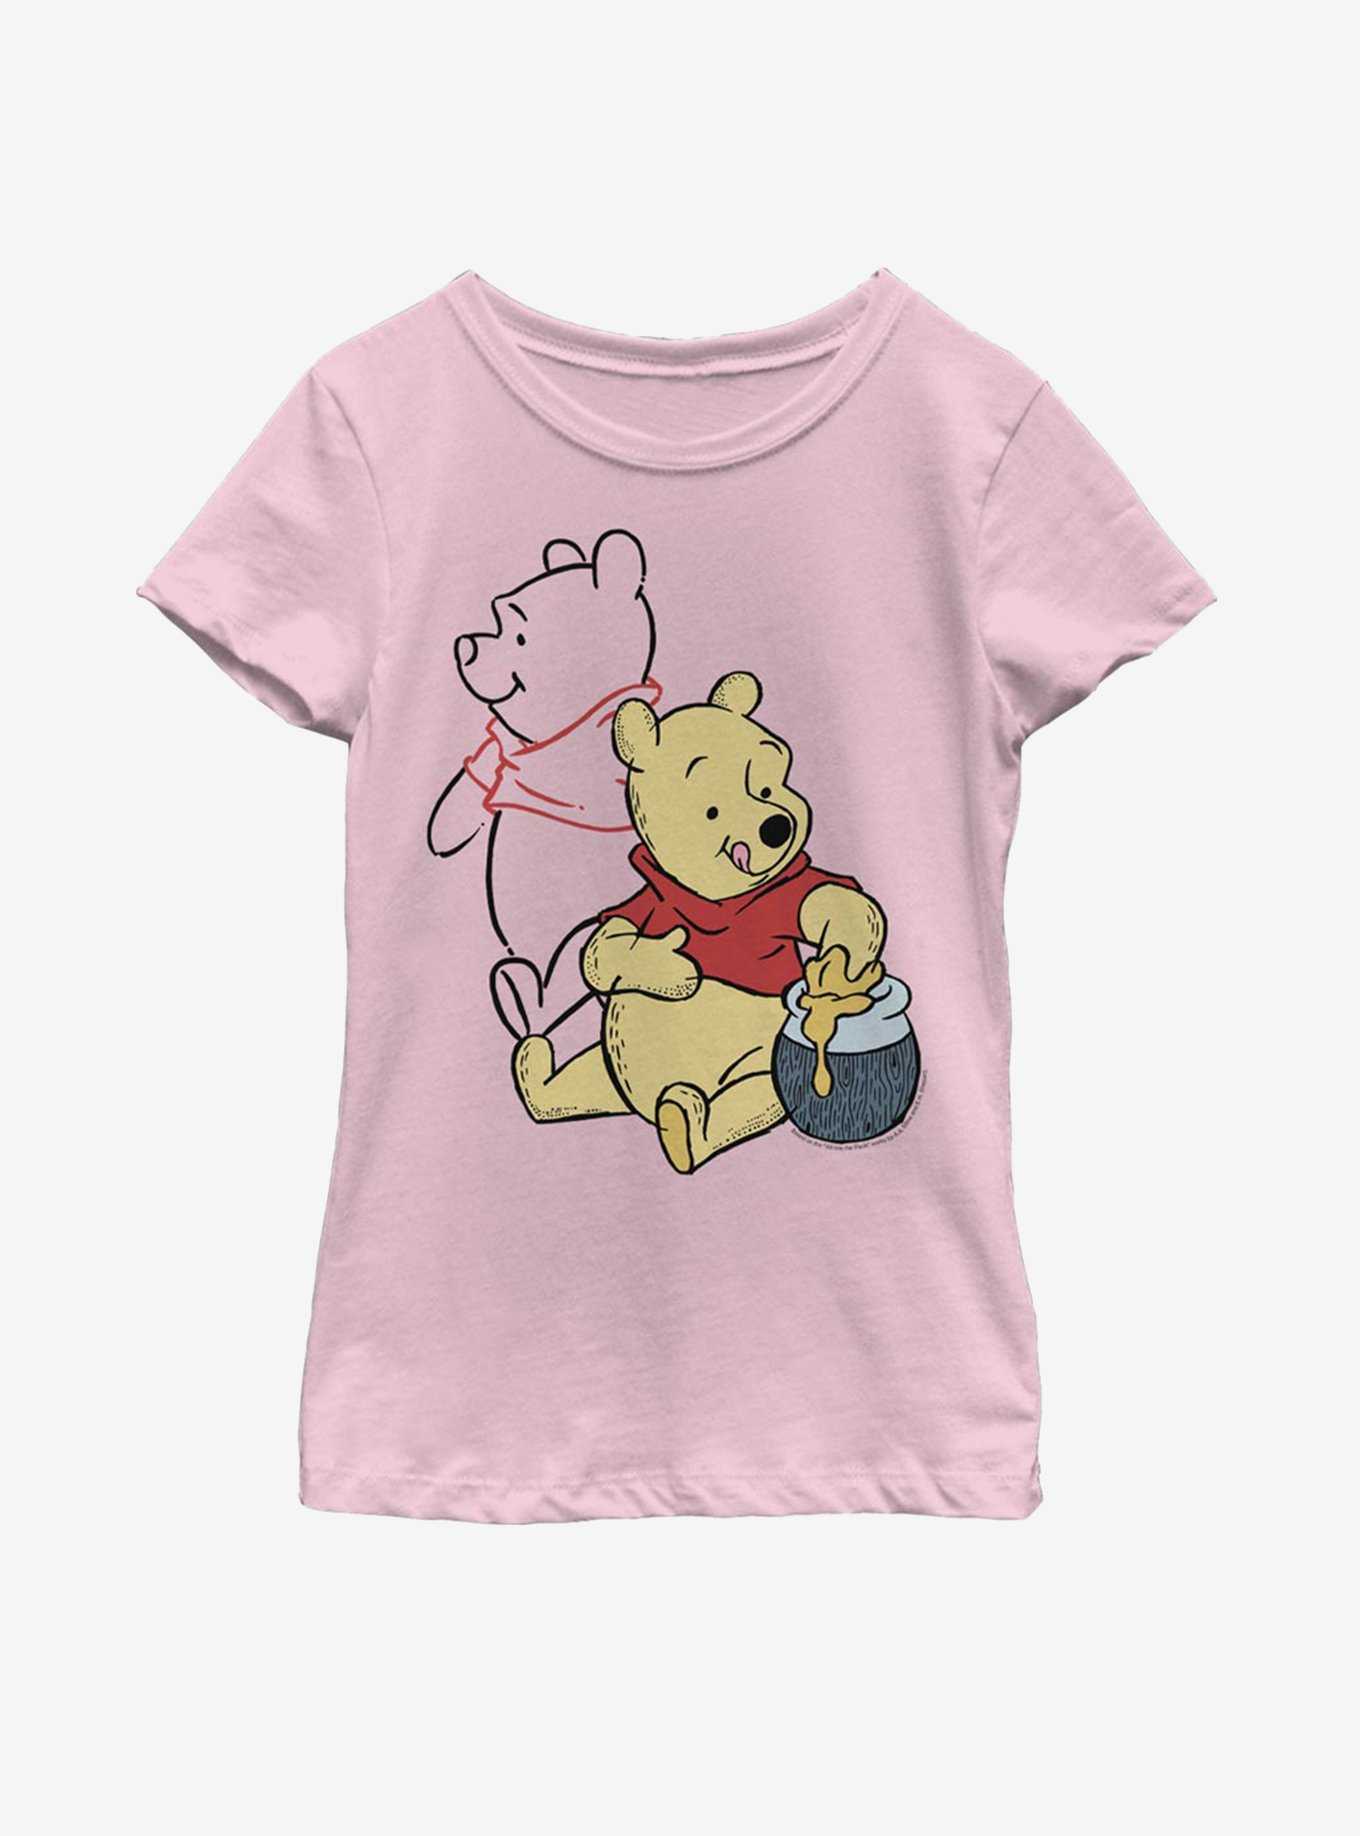 Disney Winnie The Pooh Line Art Youth Girls T-Shirt, , hi-res